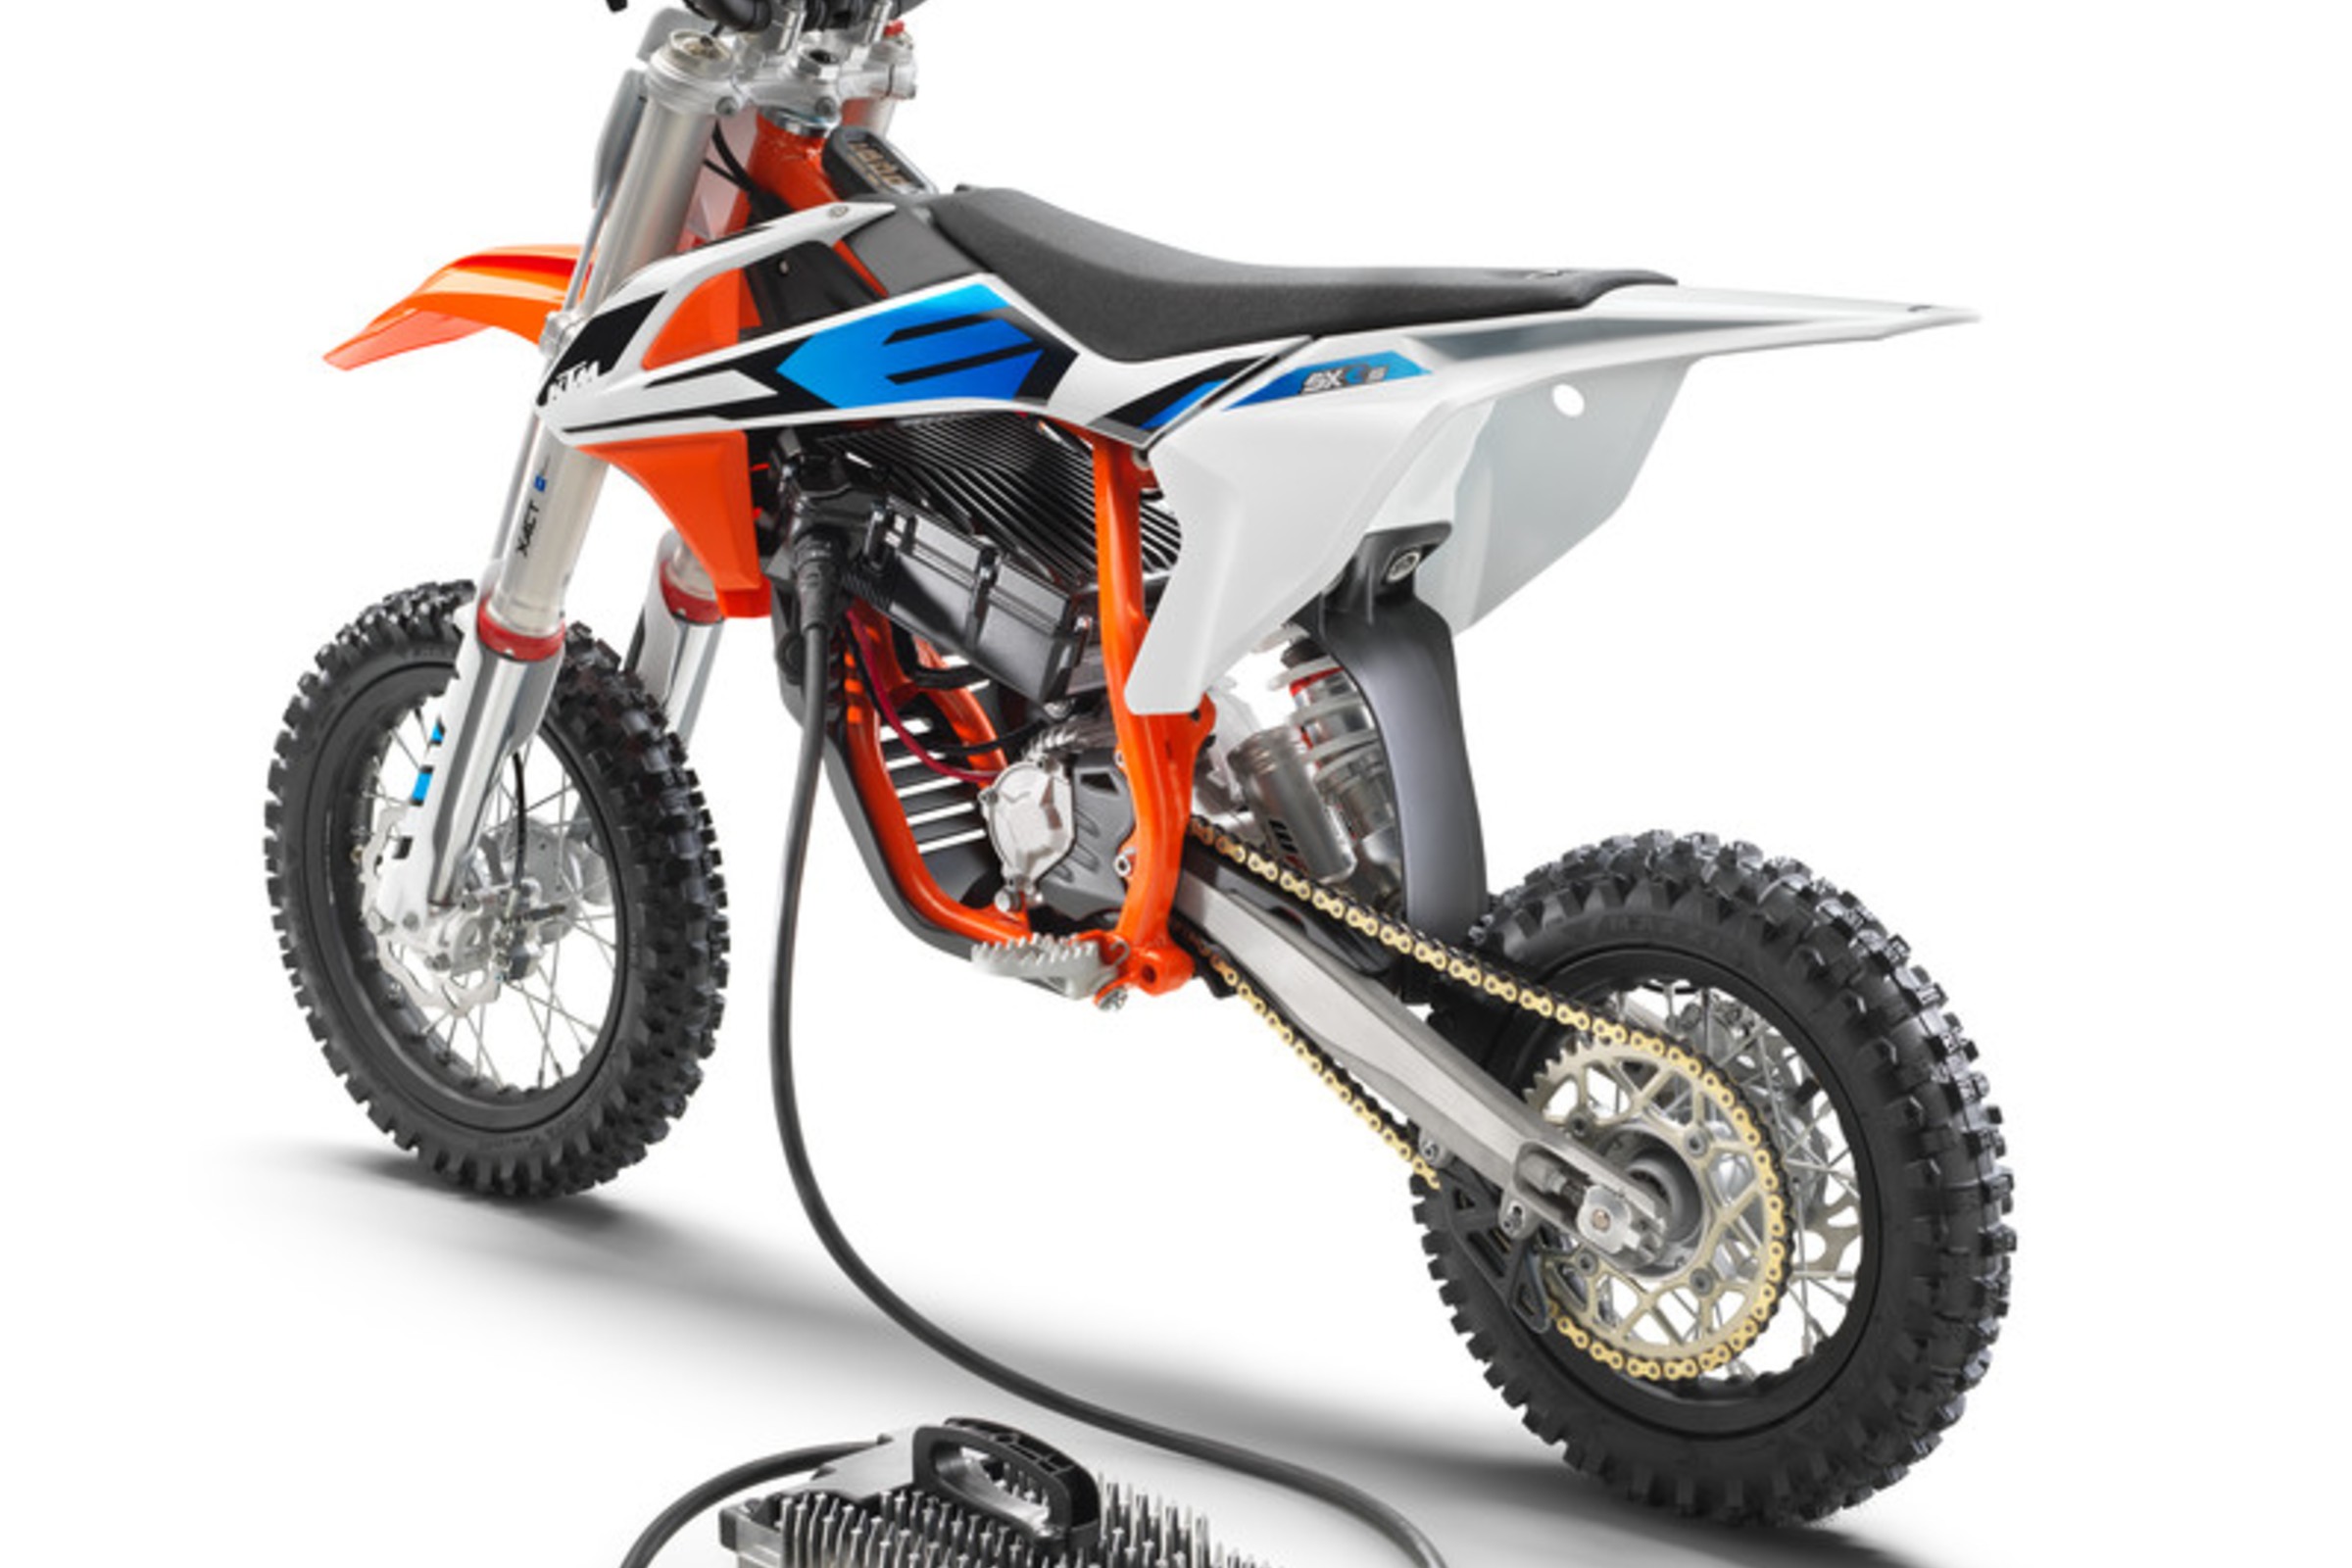 Ktm Introduces 50Cc-Sized Electric Dirt Bike - Racer X